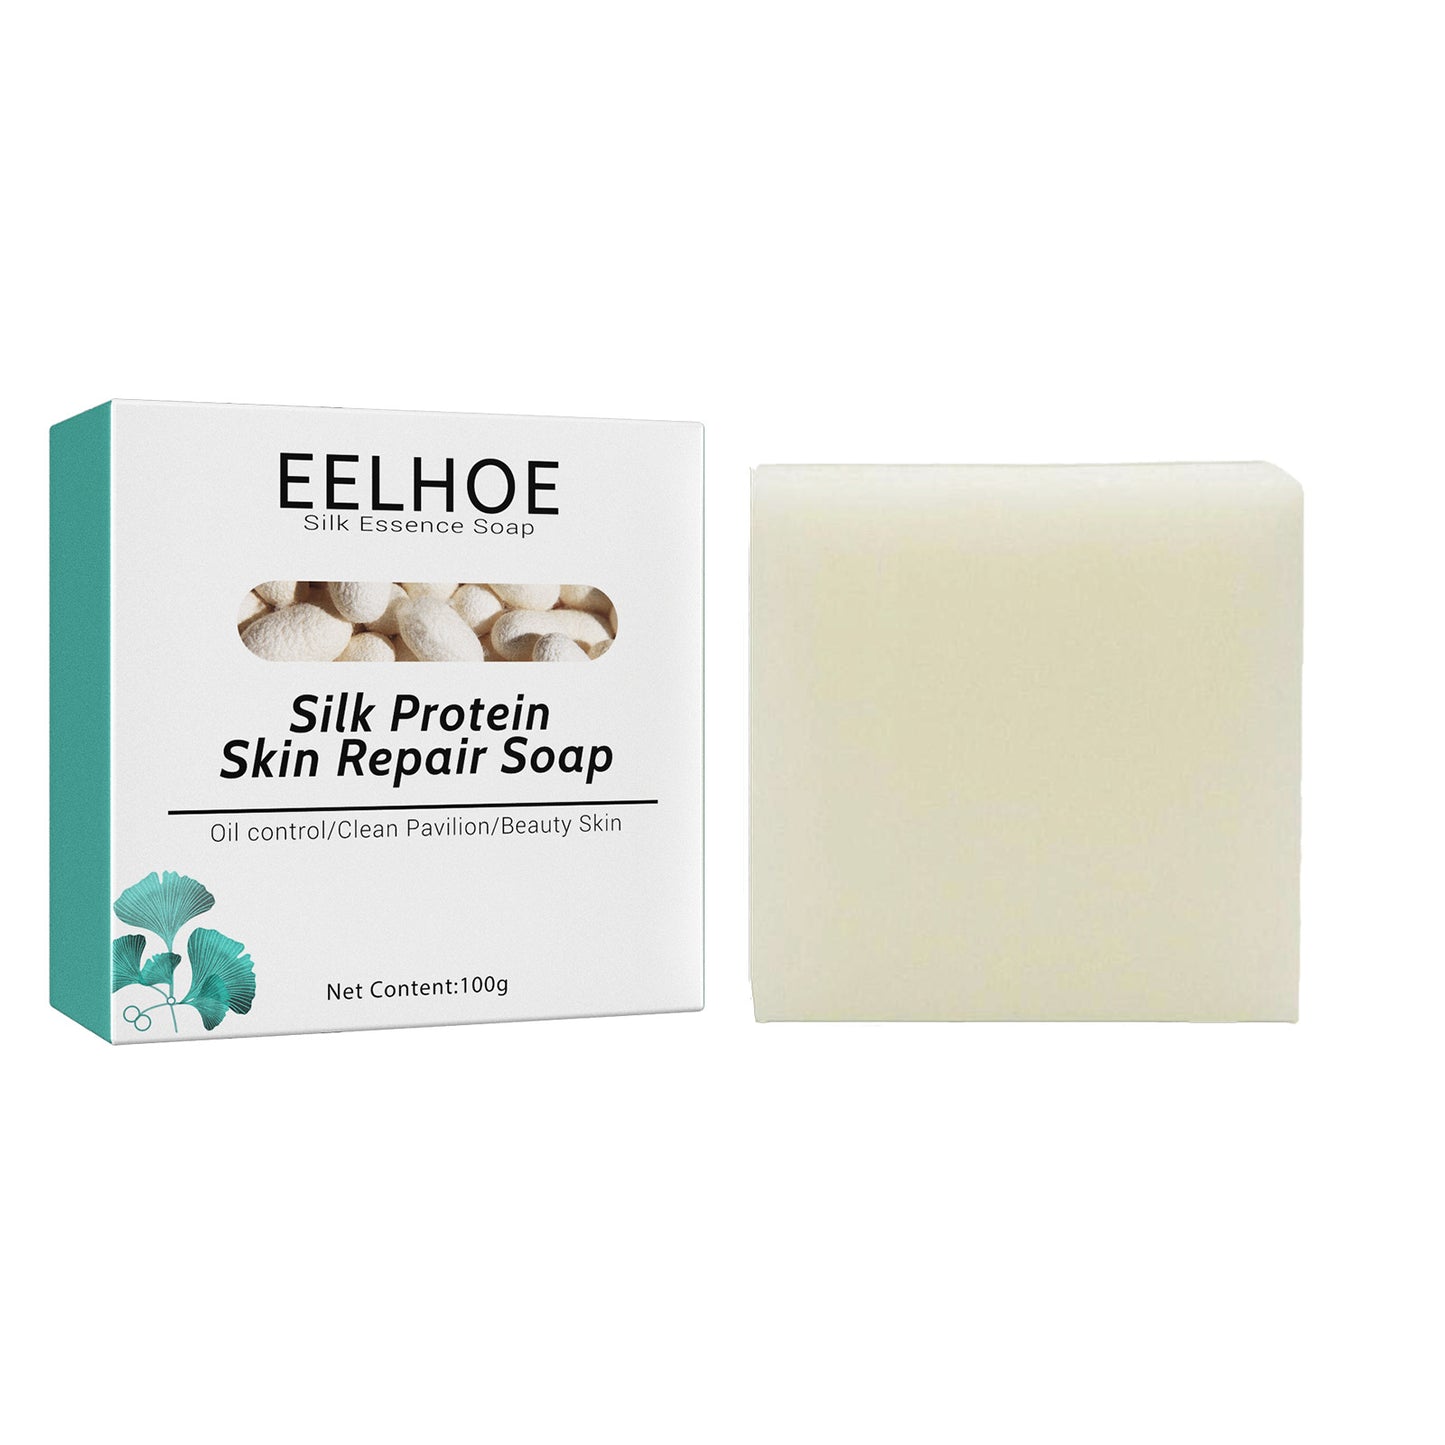 EELHOE Goat Milk Protein Anti-Mite Bath Soap Deep Cleans and Repairs Skin